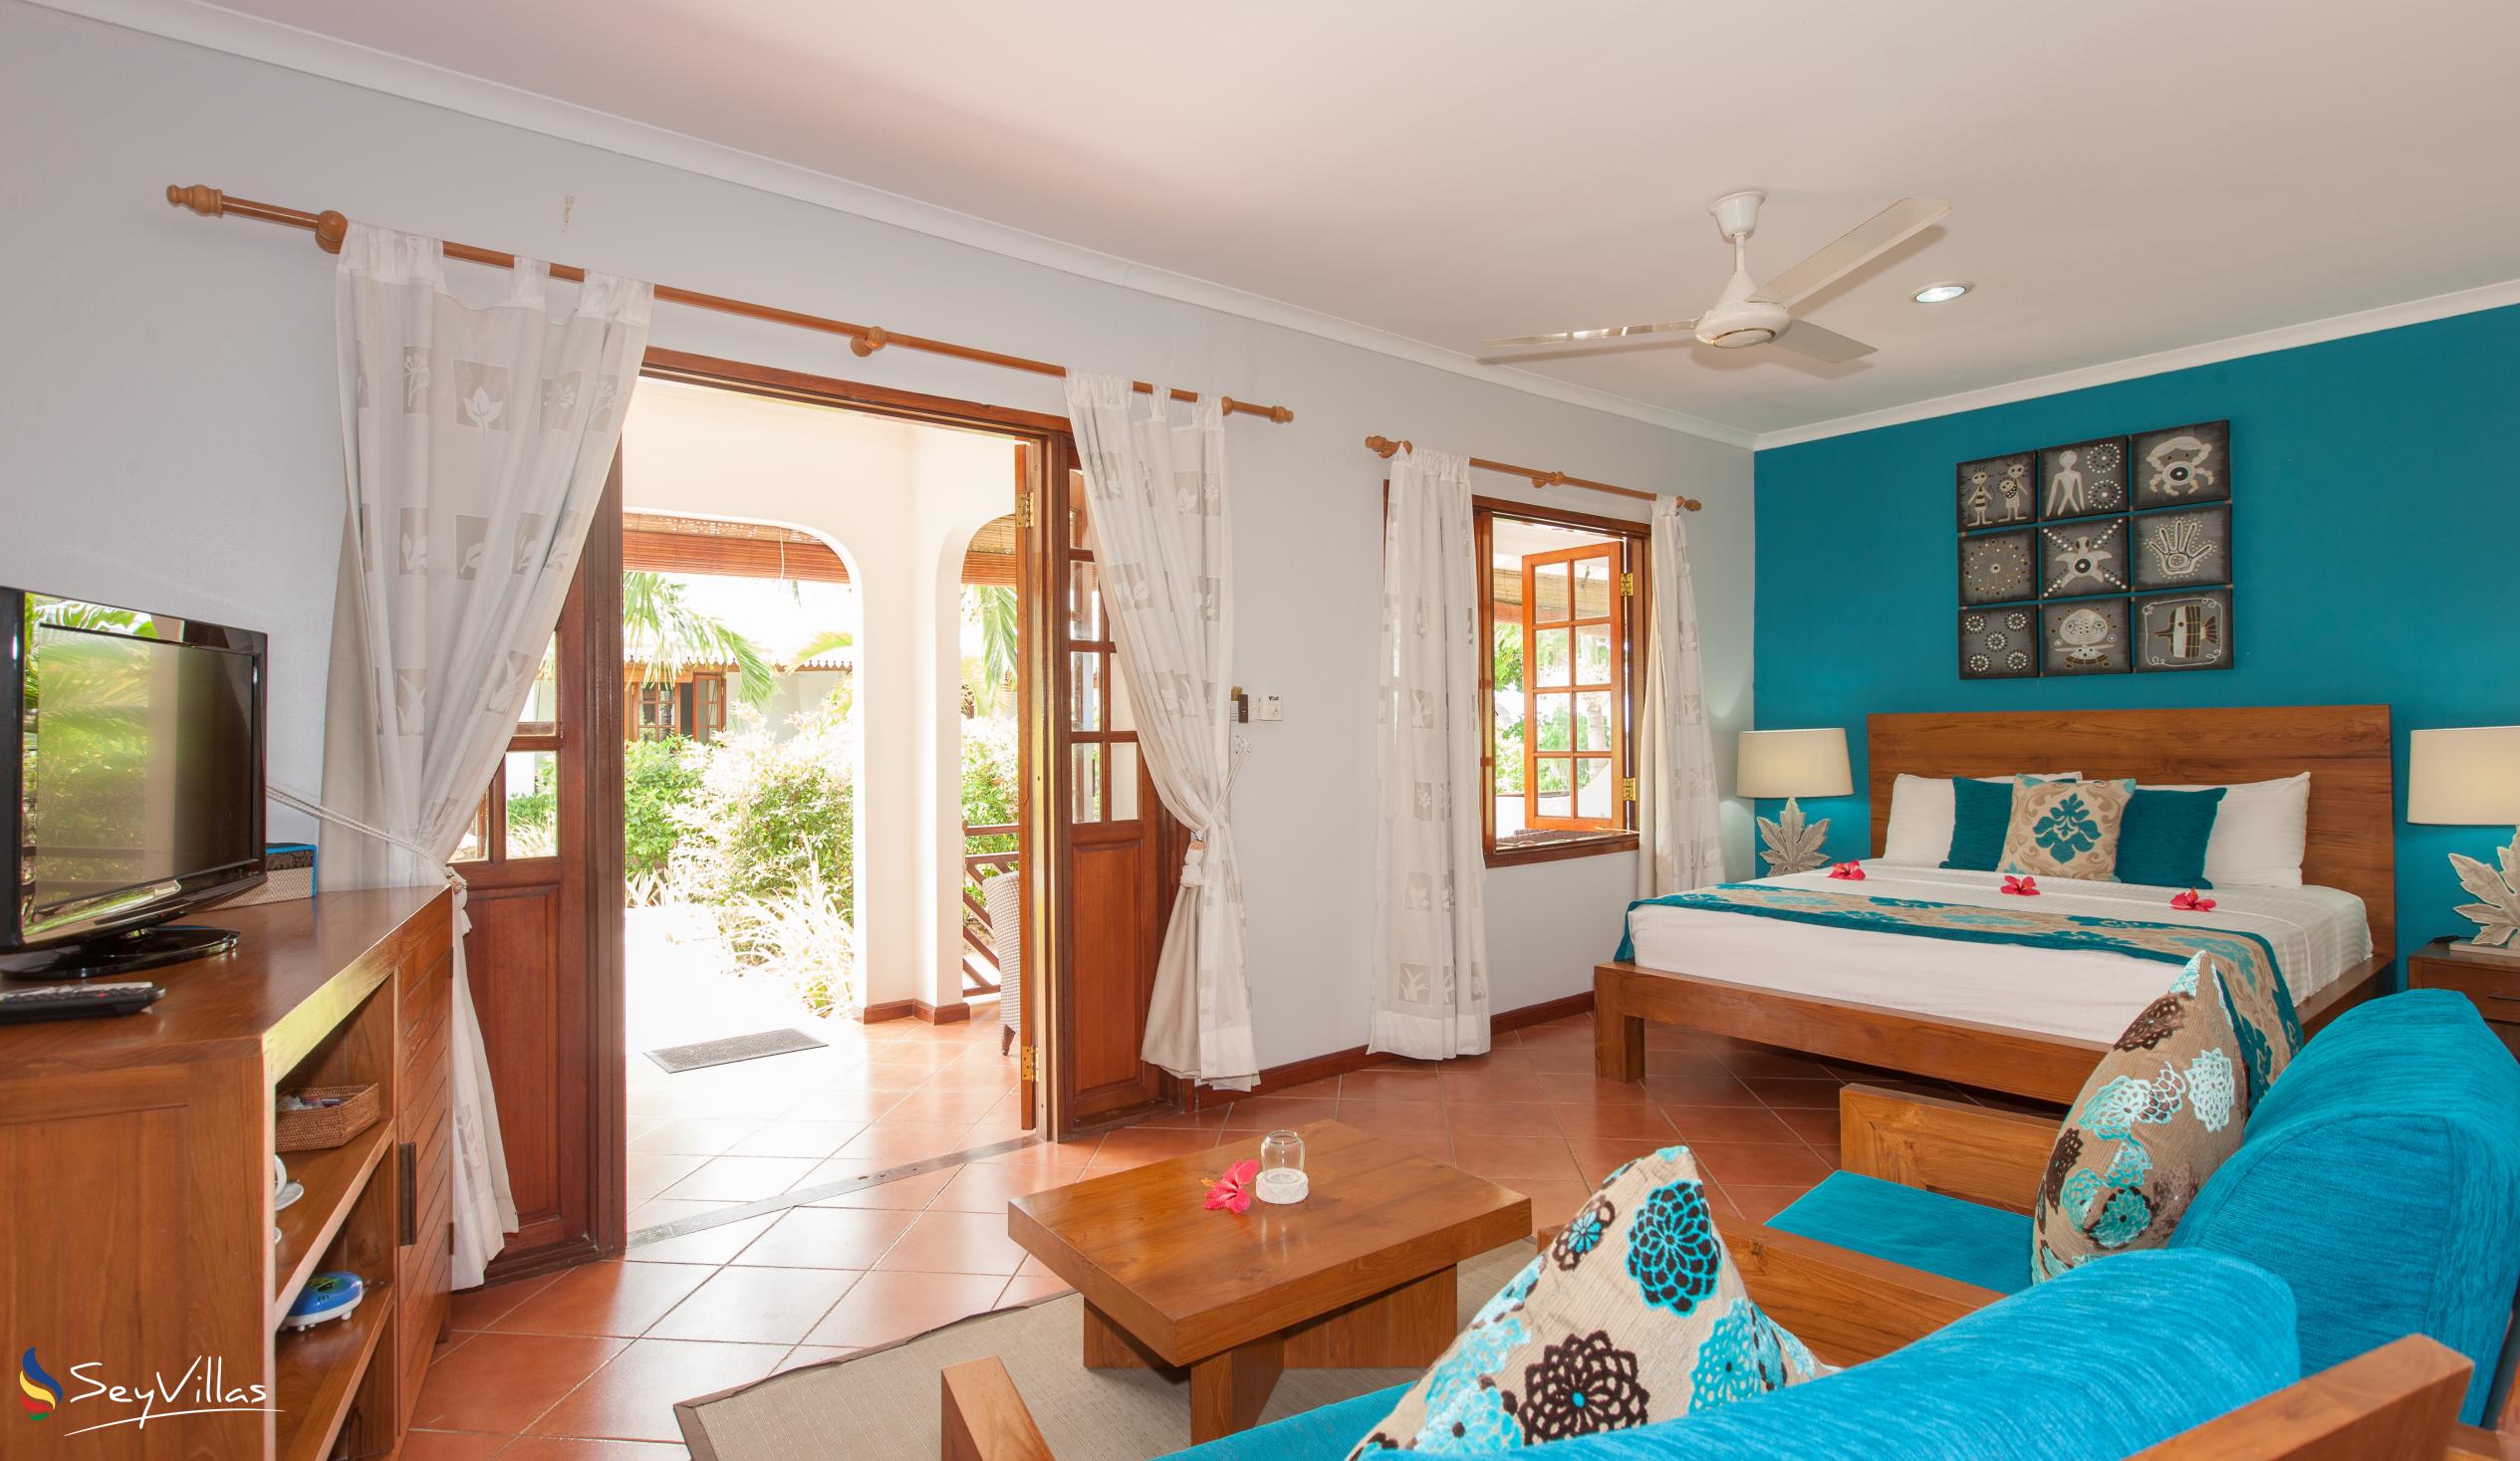 Photo 28: Villas de Mer - Superior Room - Praslin (Seychelles)